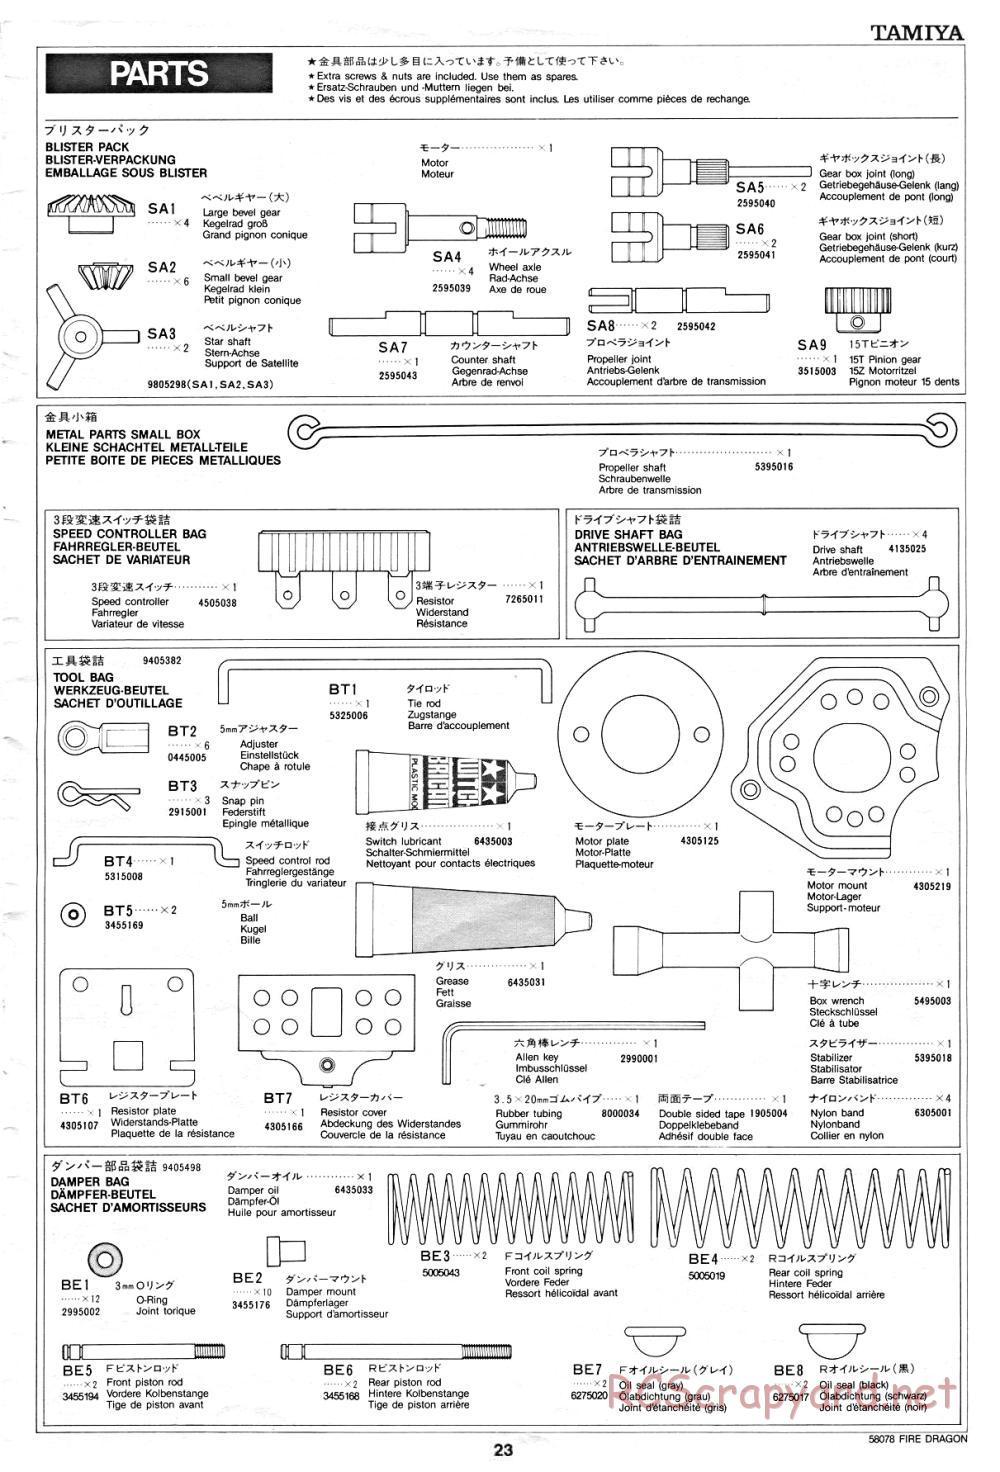 Tamiya - Fire Dragon - 58078 - Manual - Page 23